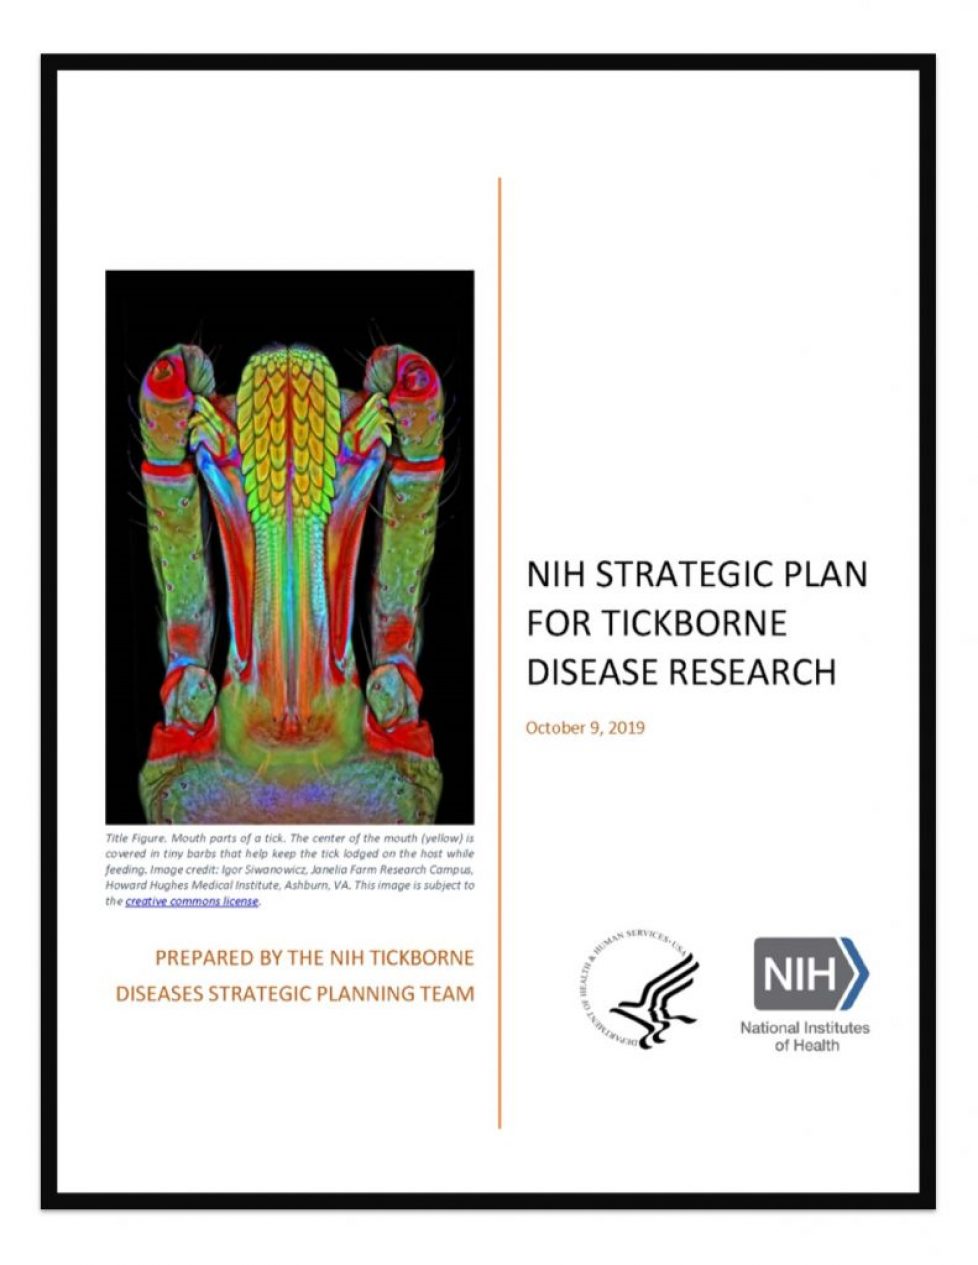 nih strategic plan for tickborne disease research